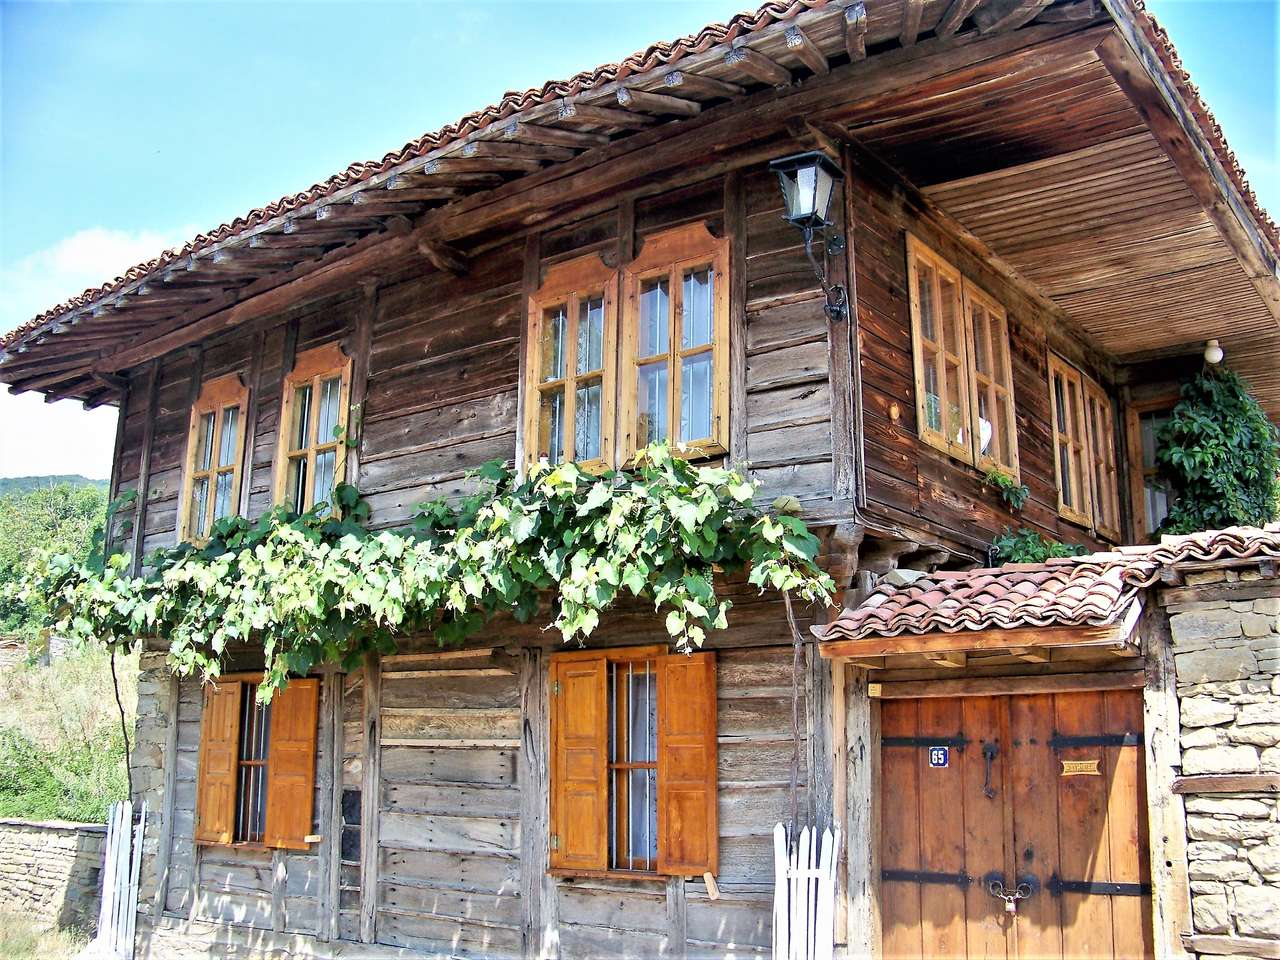 Zheravna Village in Bulgarije online puzzel